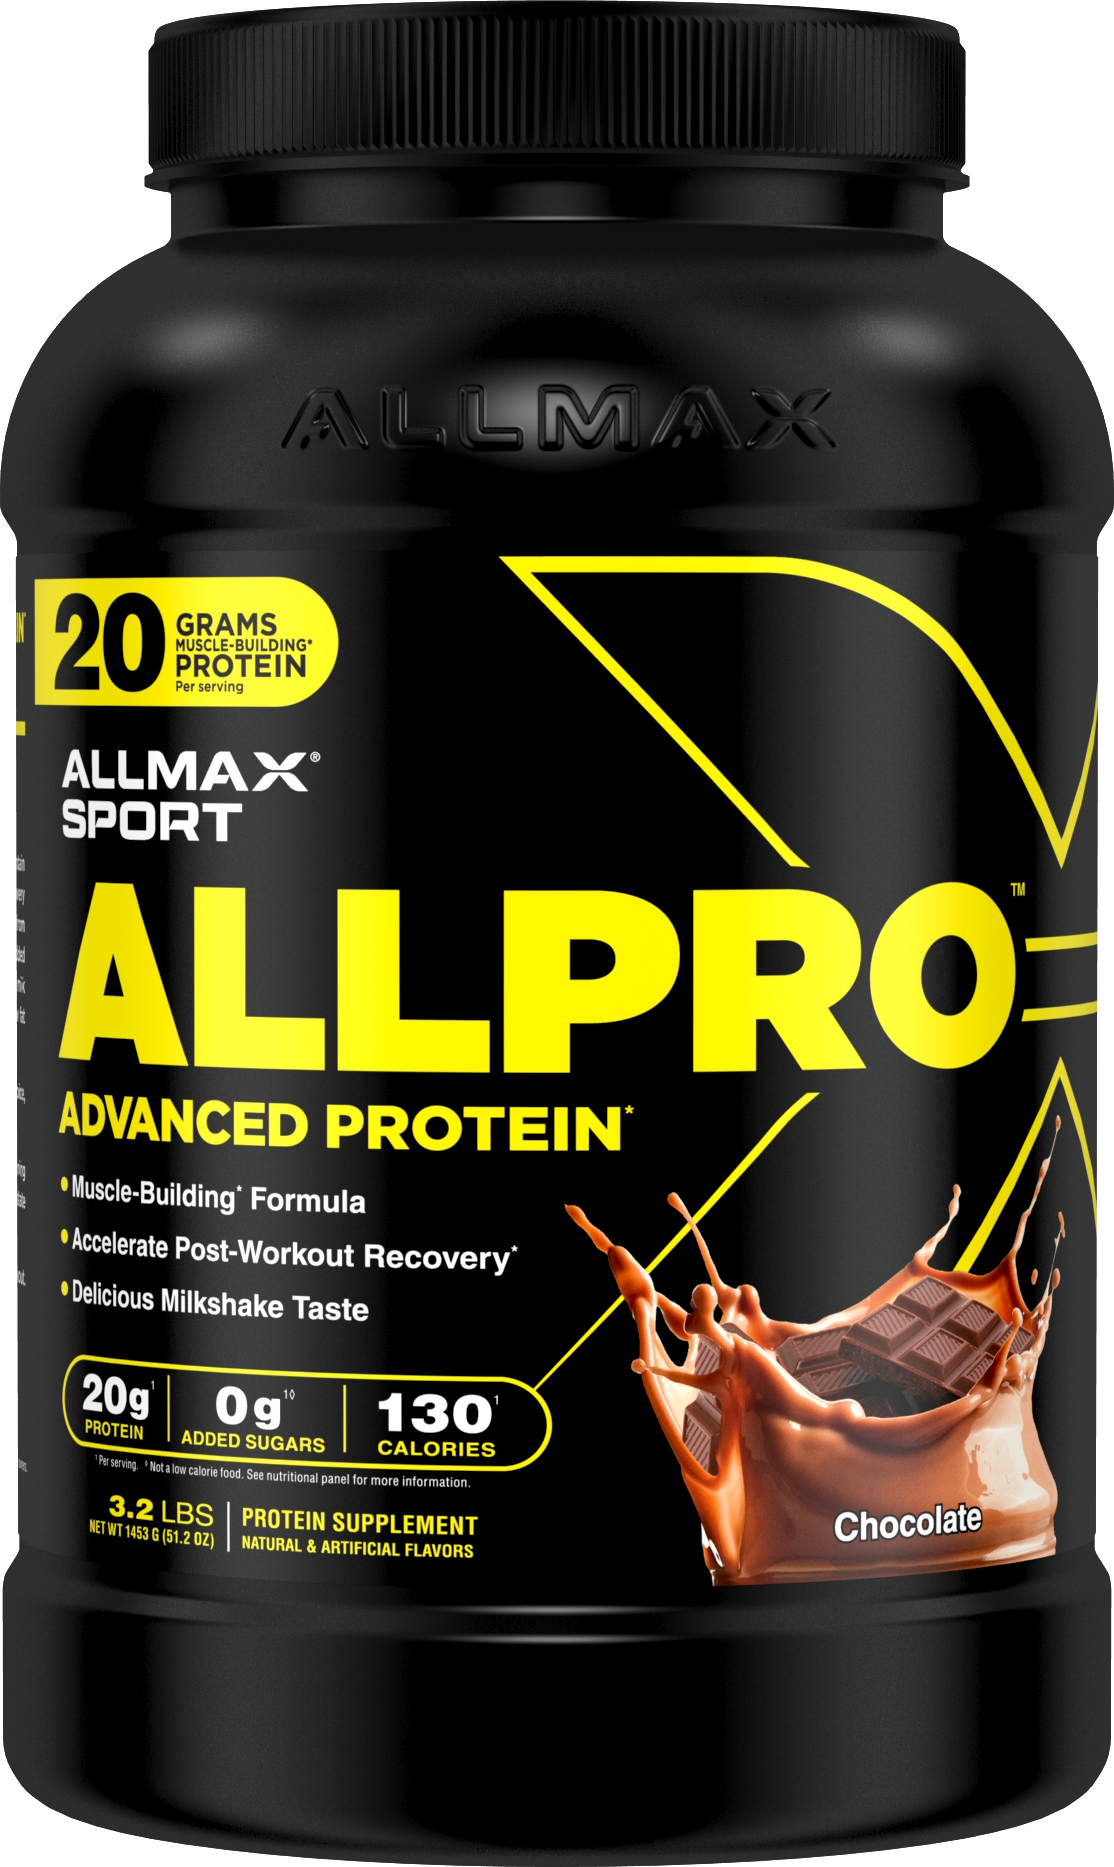 Allmax Allpro Advanced Protein Chocolate bottle